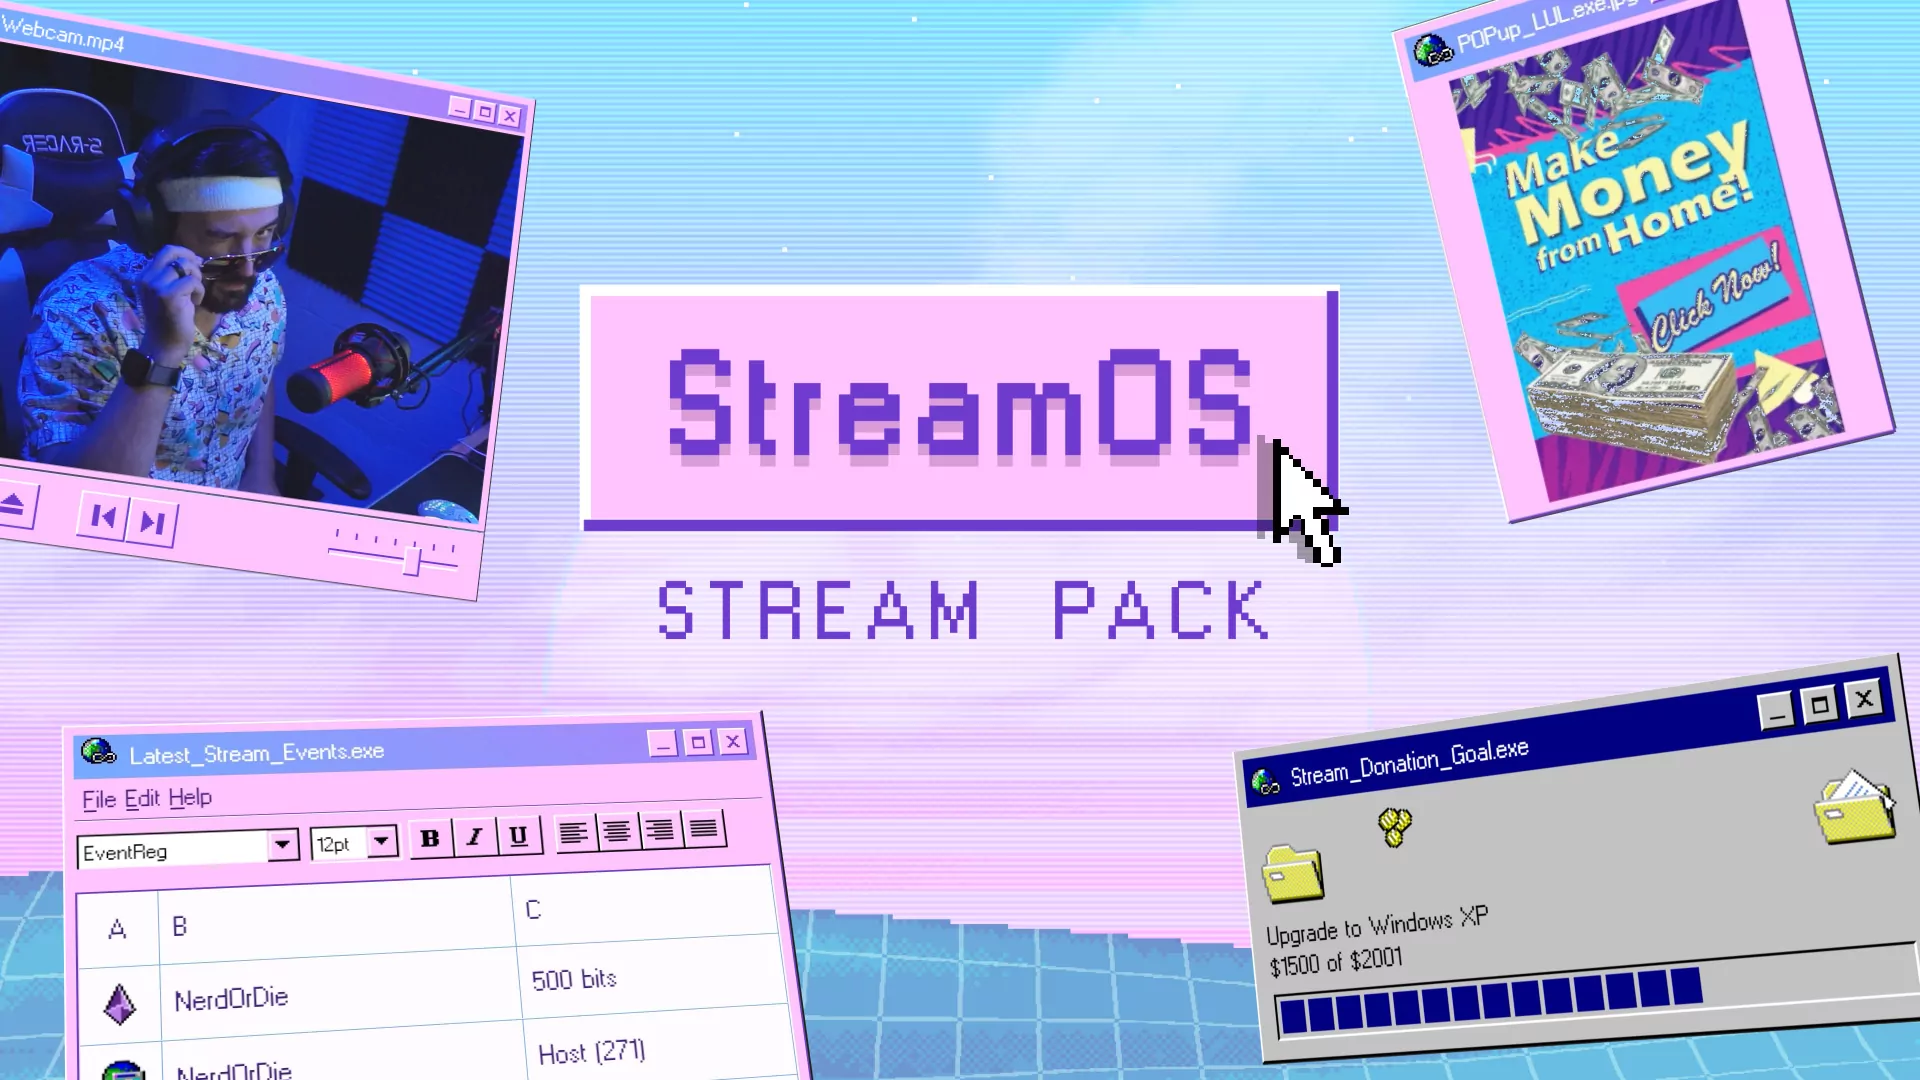 StreamOS - Stream Pack - Main Image